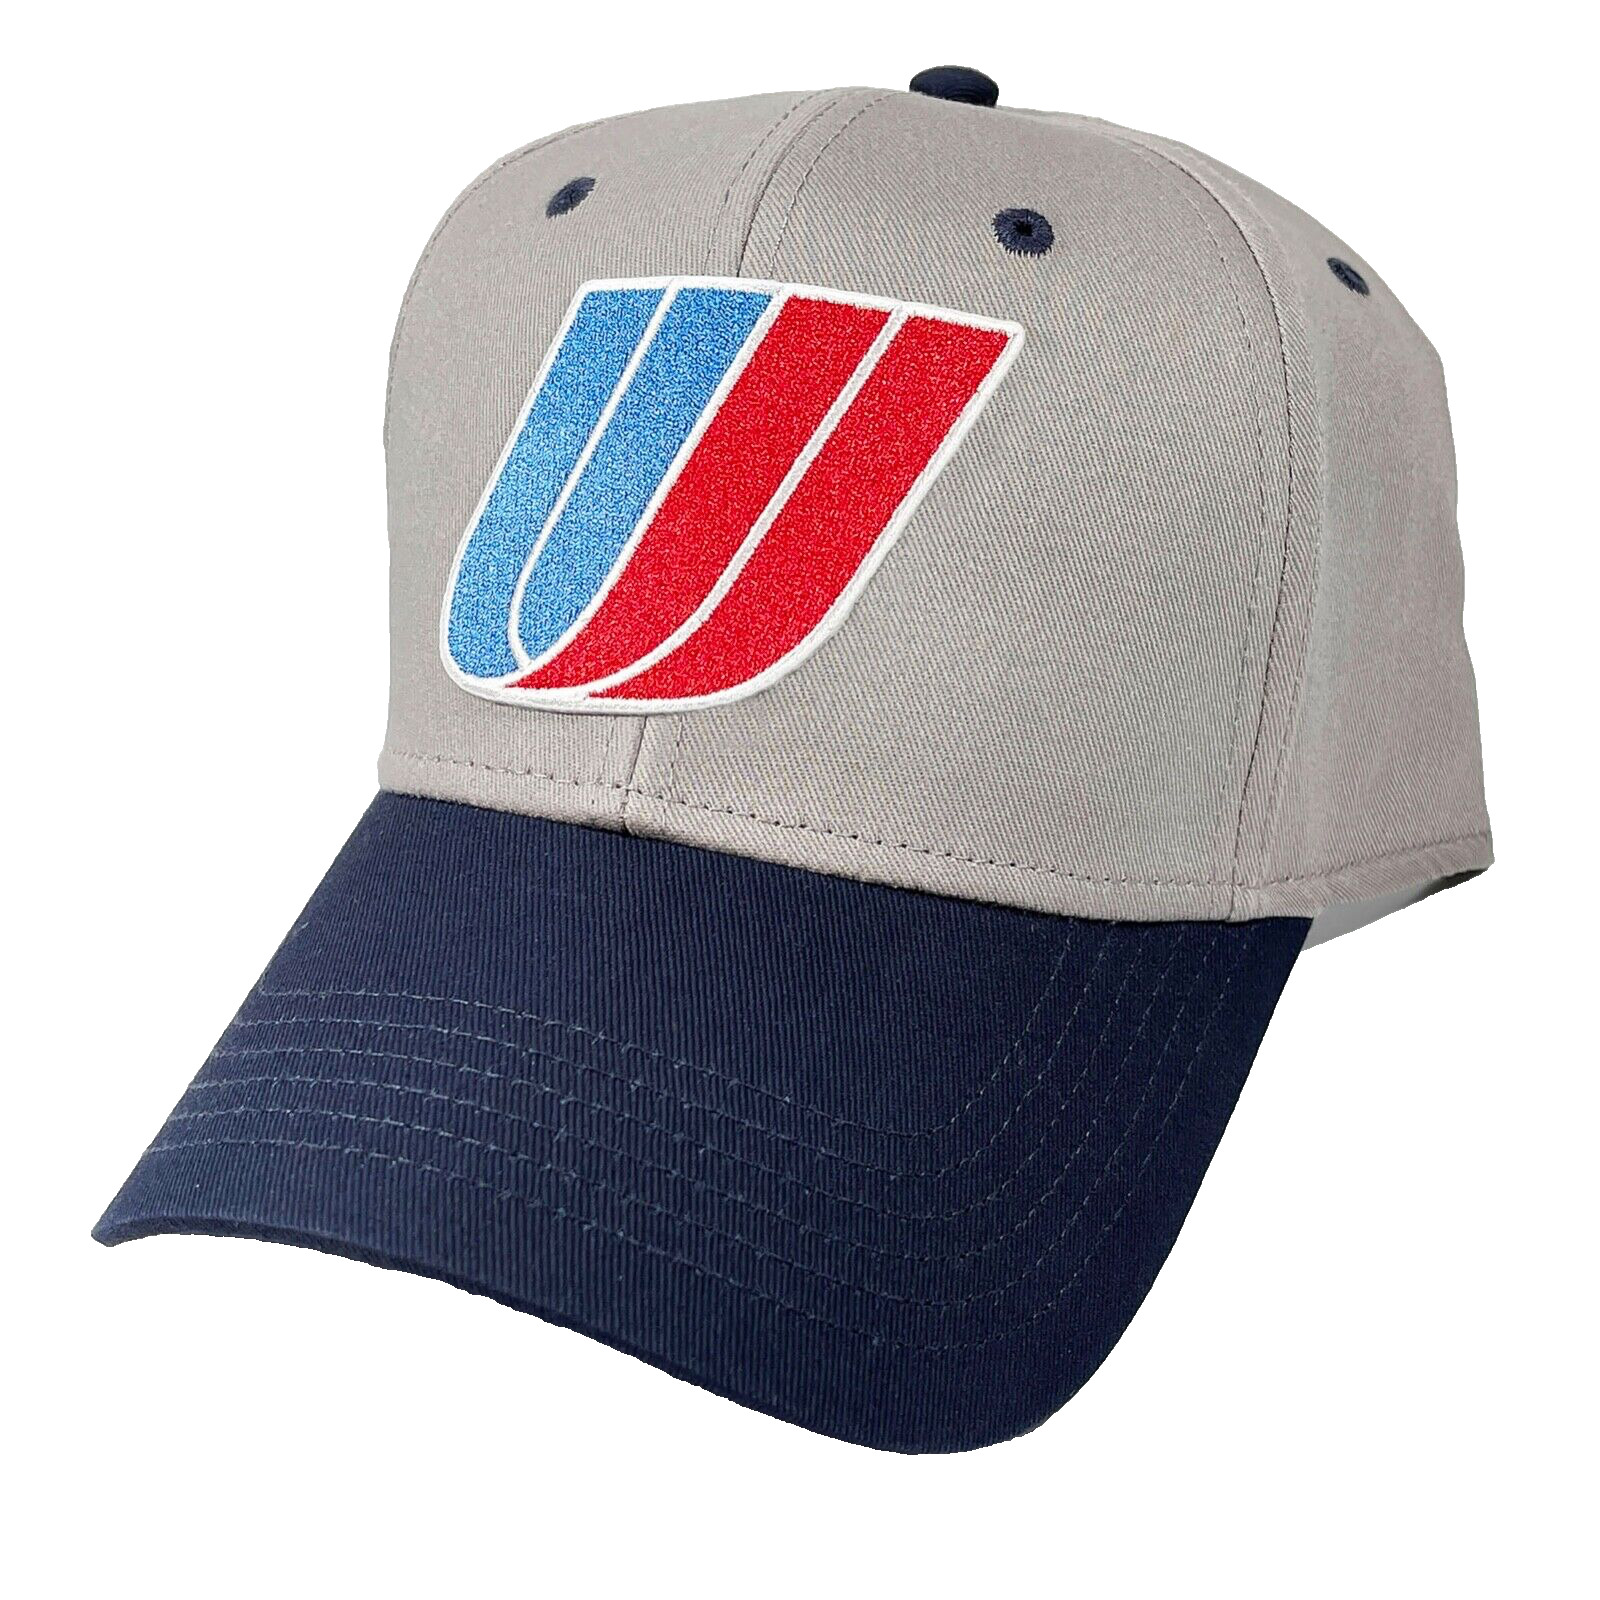 Classic UNITED AIRLINES CREW CAP - Brand New, Unworn, Collectible